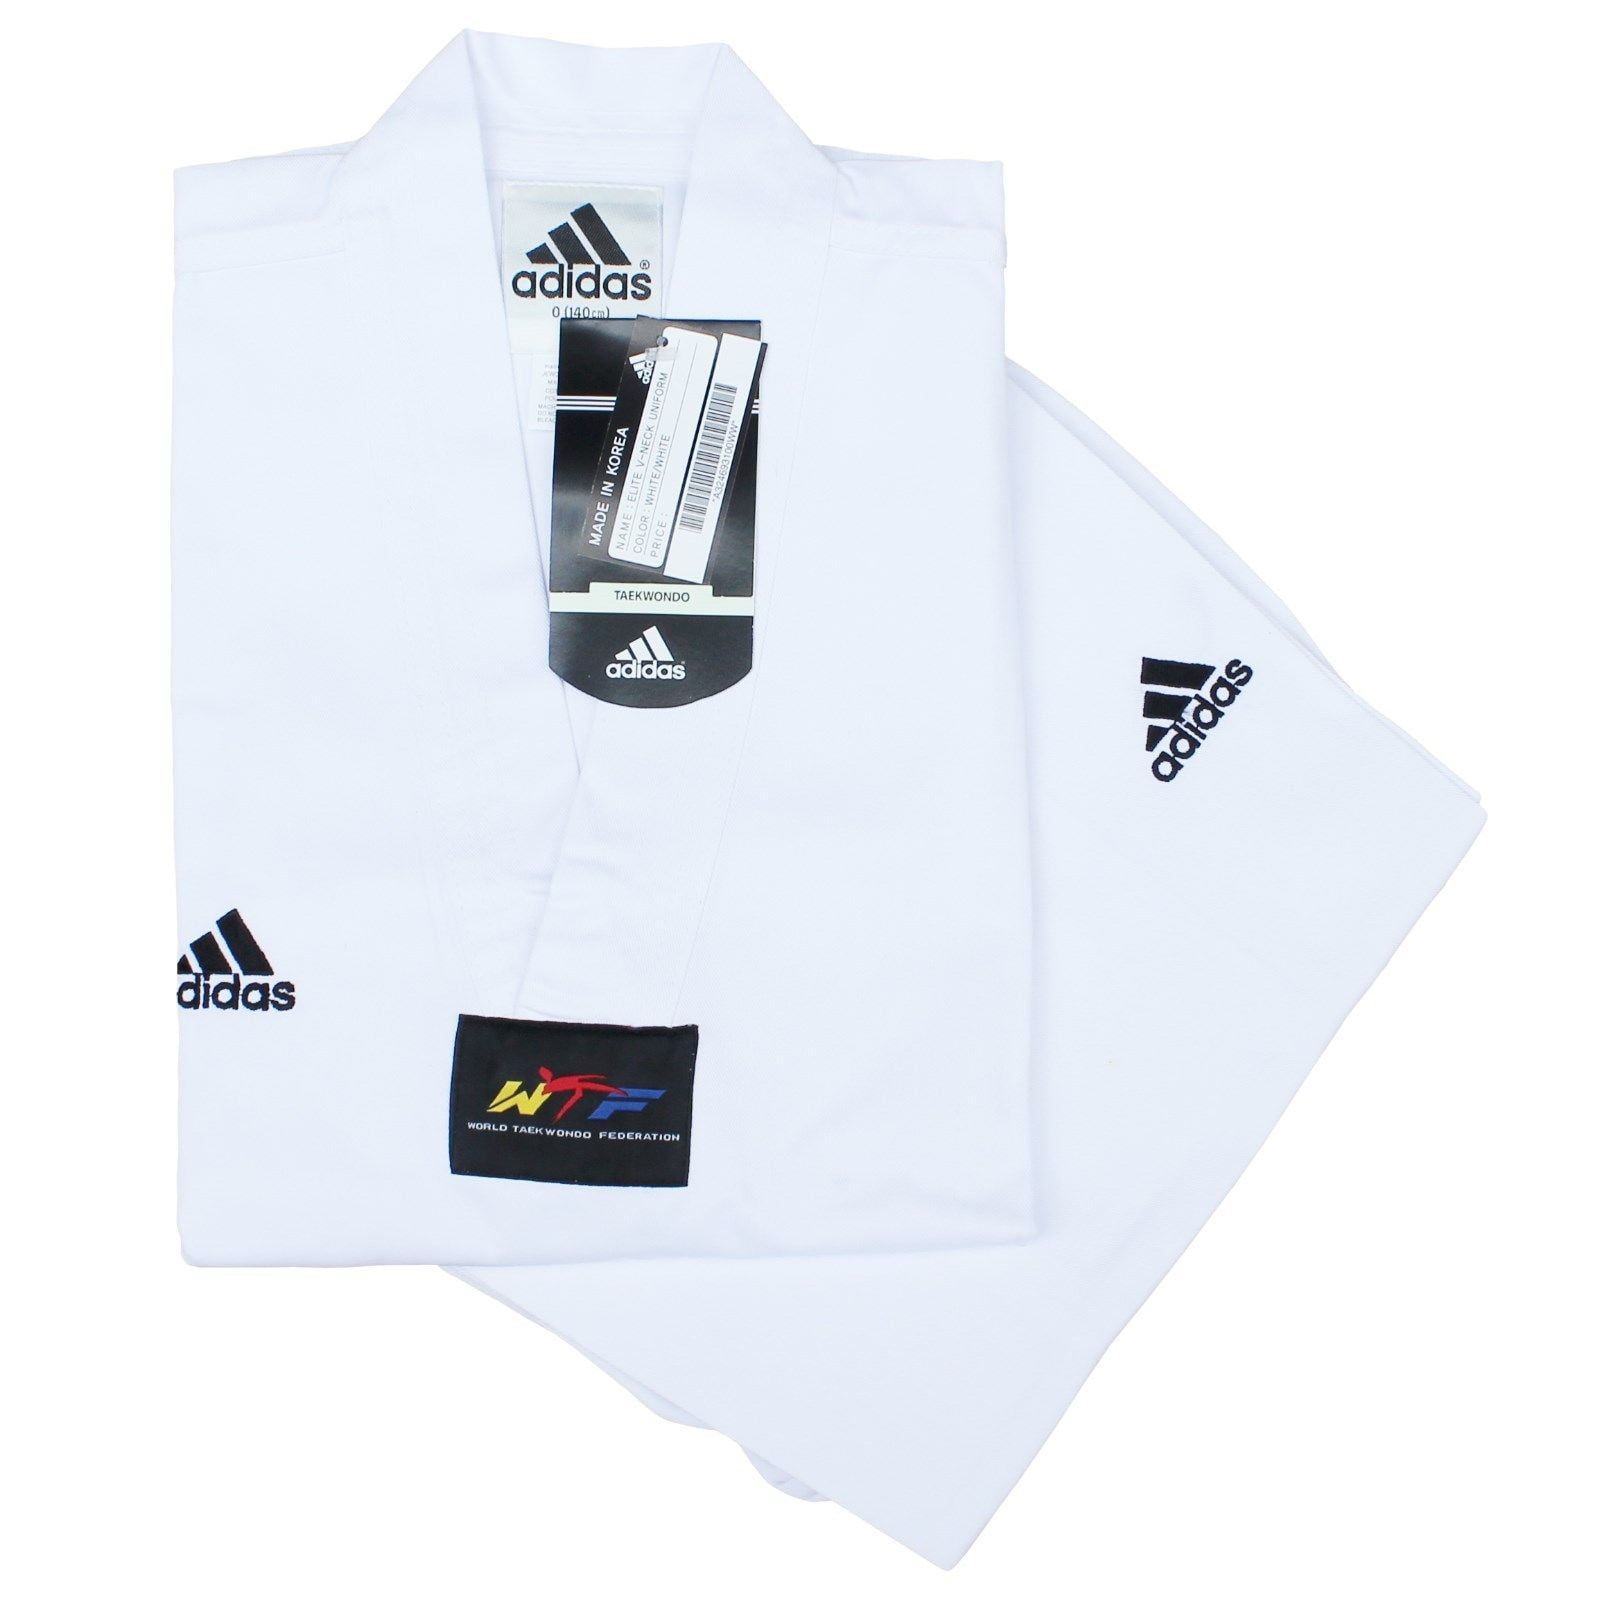 adidas Taekwondo WTF Approved Uniform Dobok, White - Walmart.com